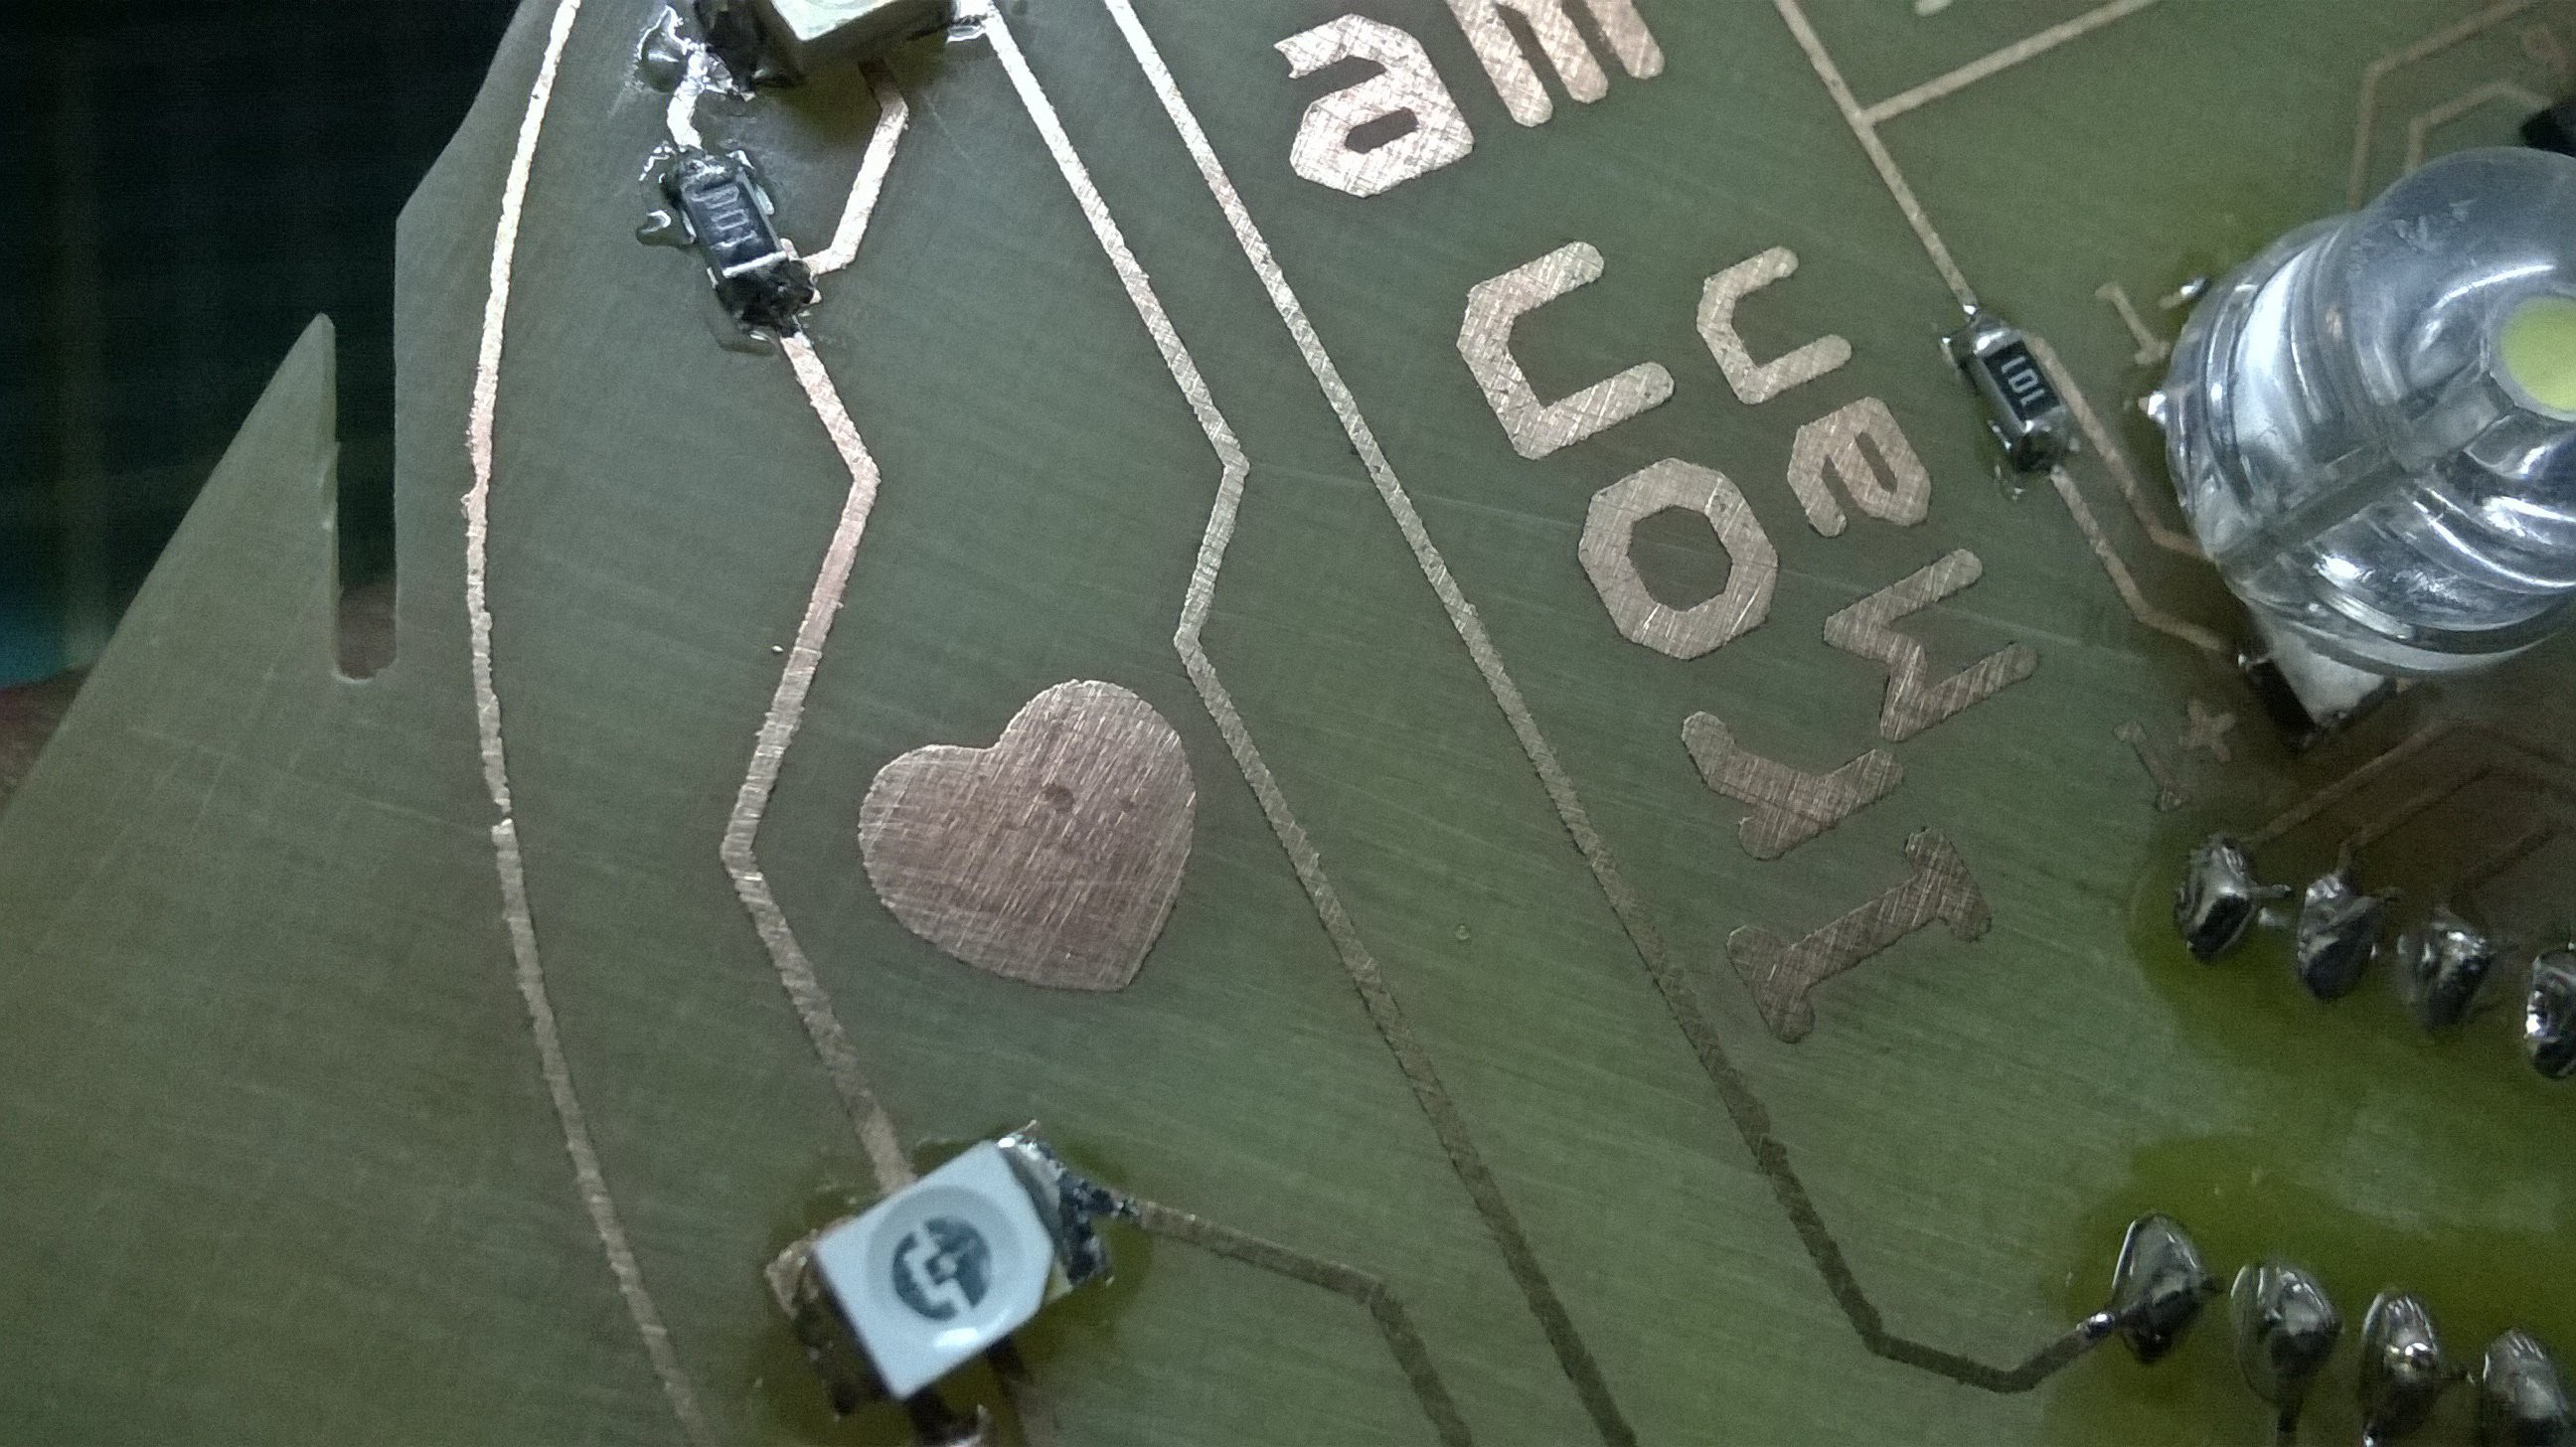 Board soldered